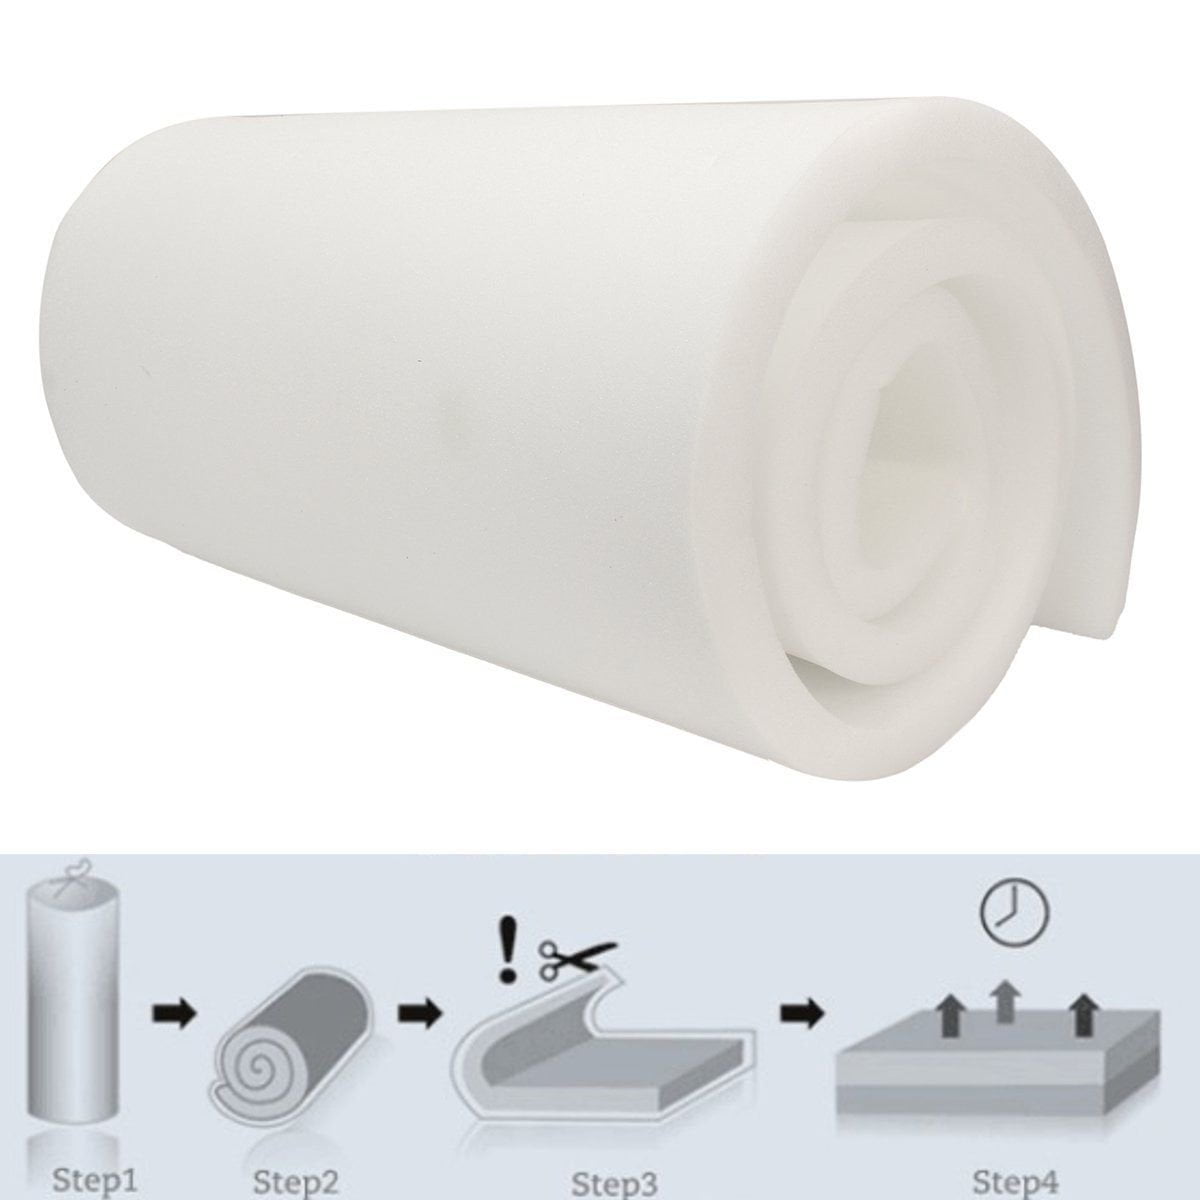 AK Trading Co. High Density Upholstery Foam Cushion, Polyurethane Foam Sheet - Made in USA - 1 H x 24 W x 72 L,White